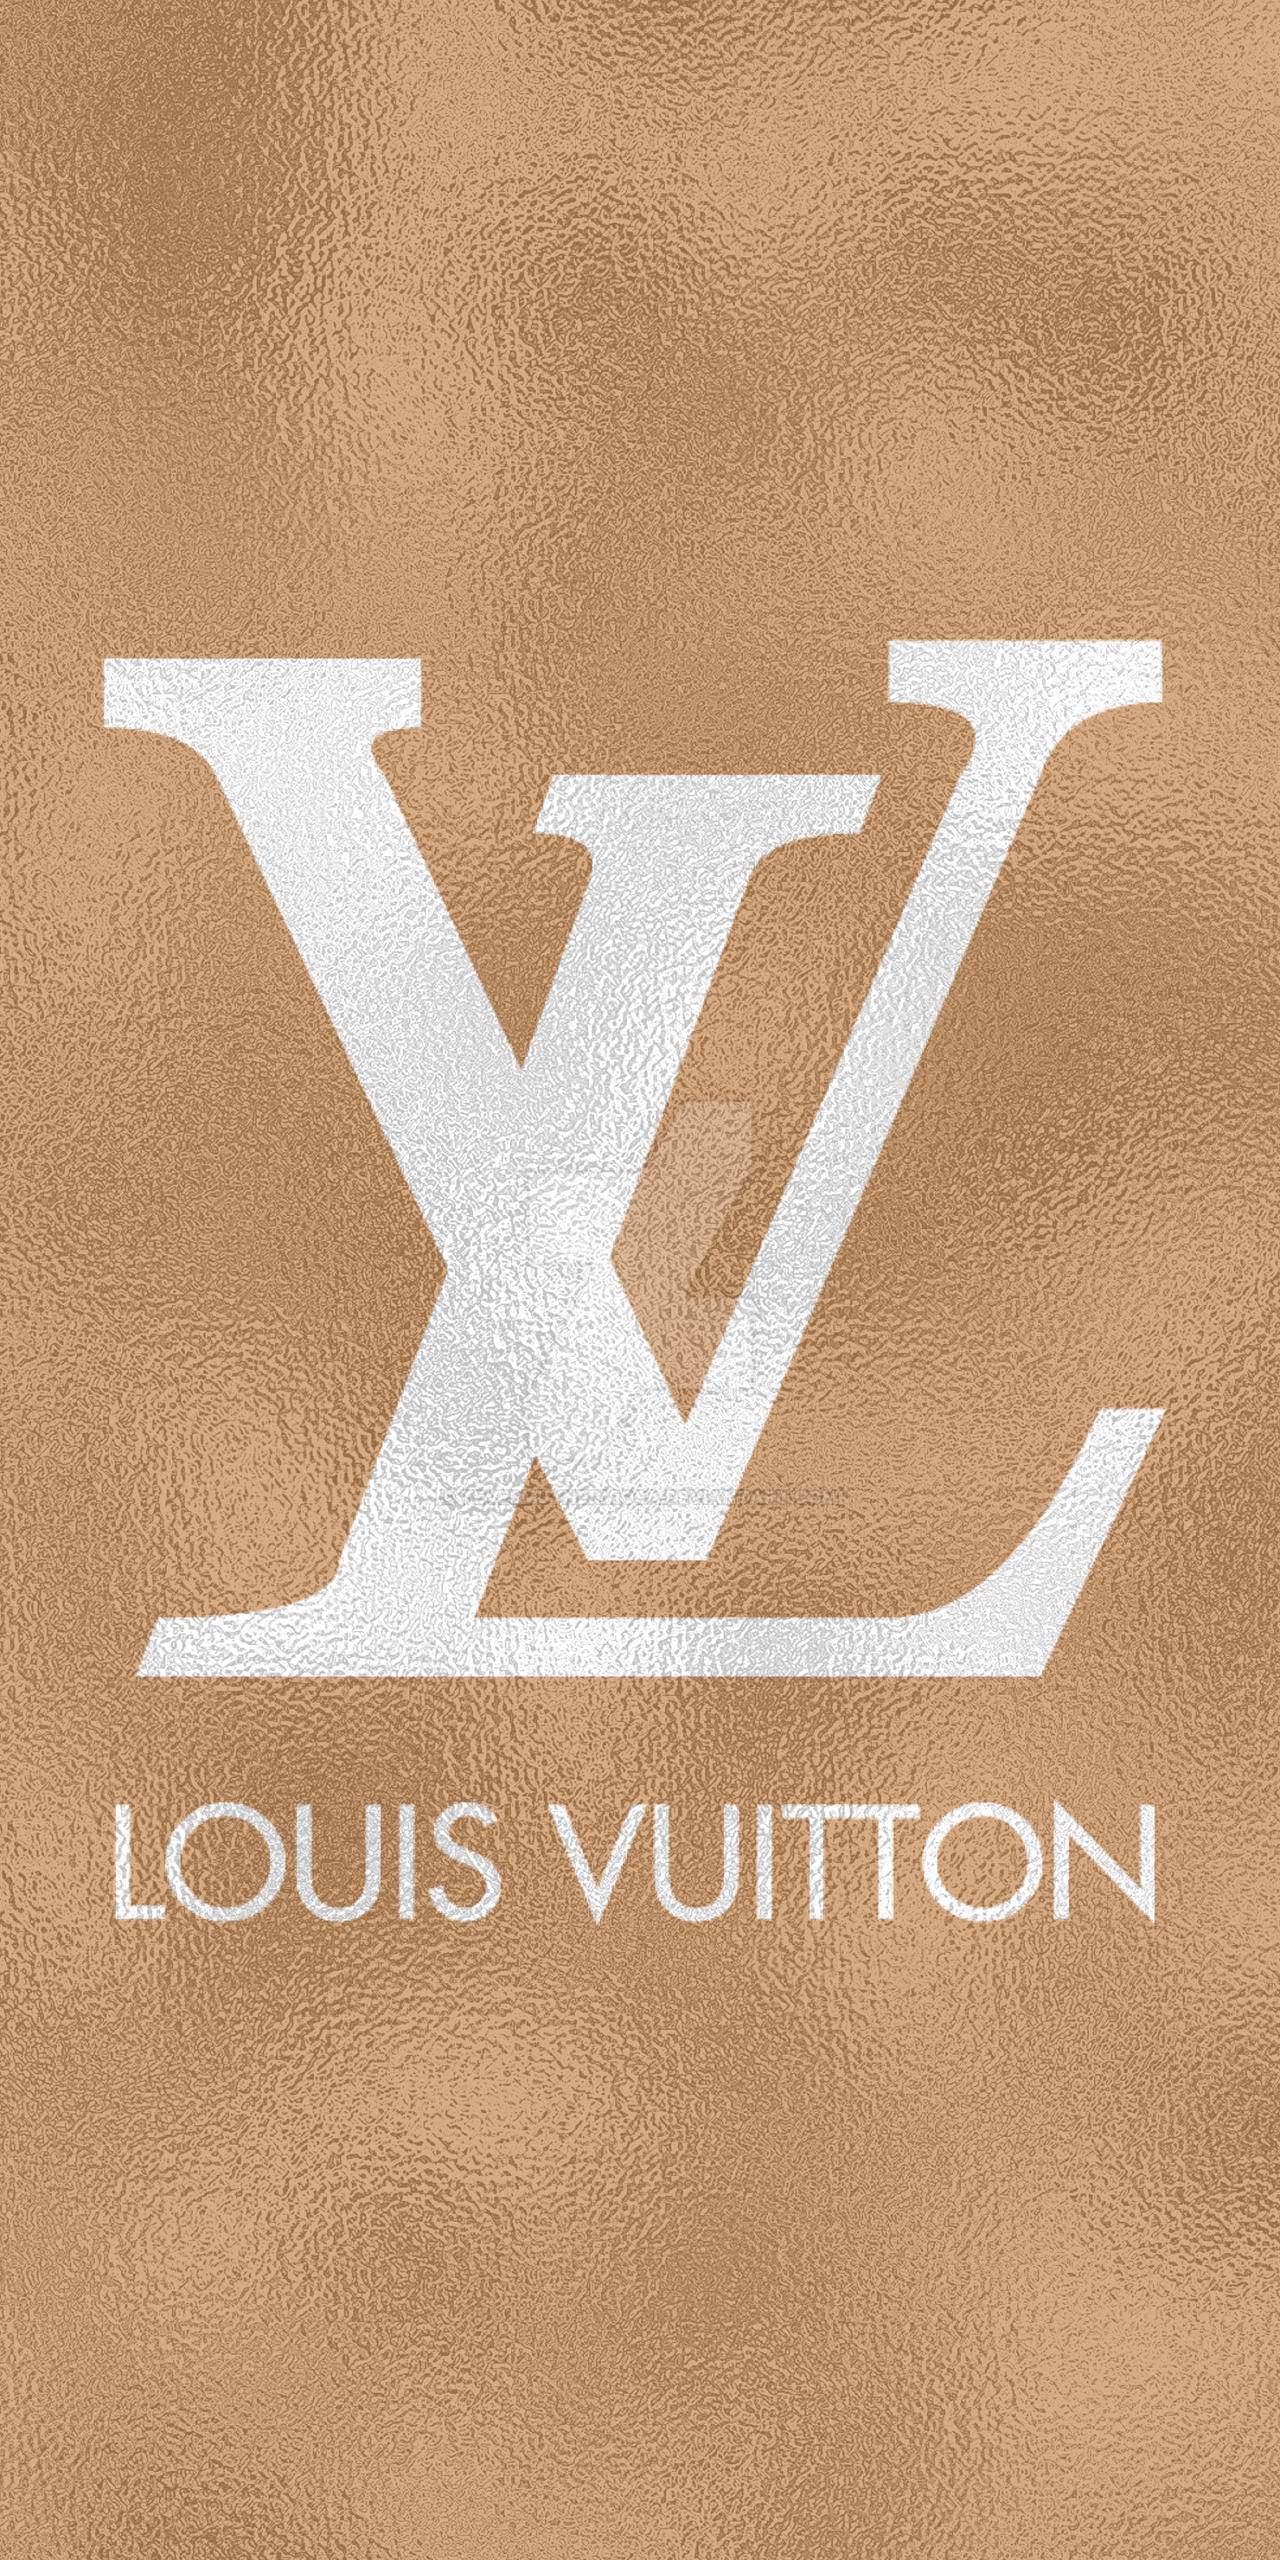 Louis Vuitton Logo Wallpaper by TeVesMuyNerviosa on DeviantArt